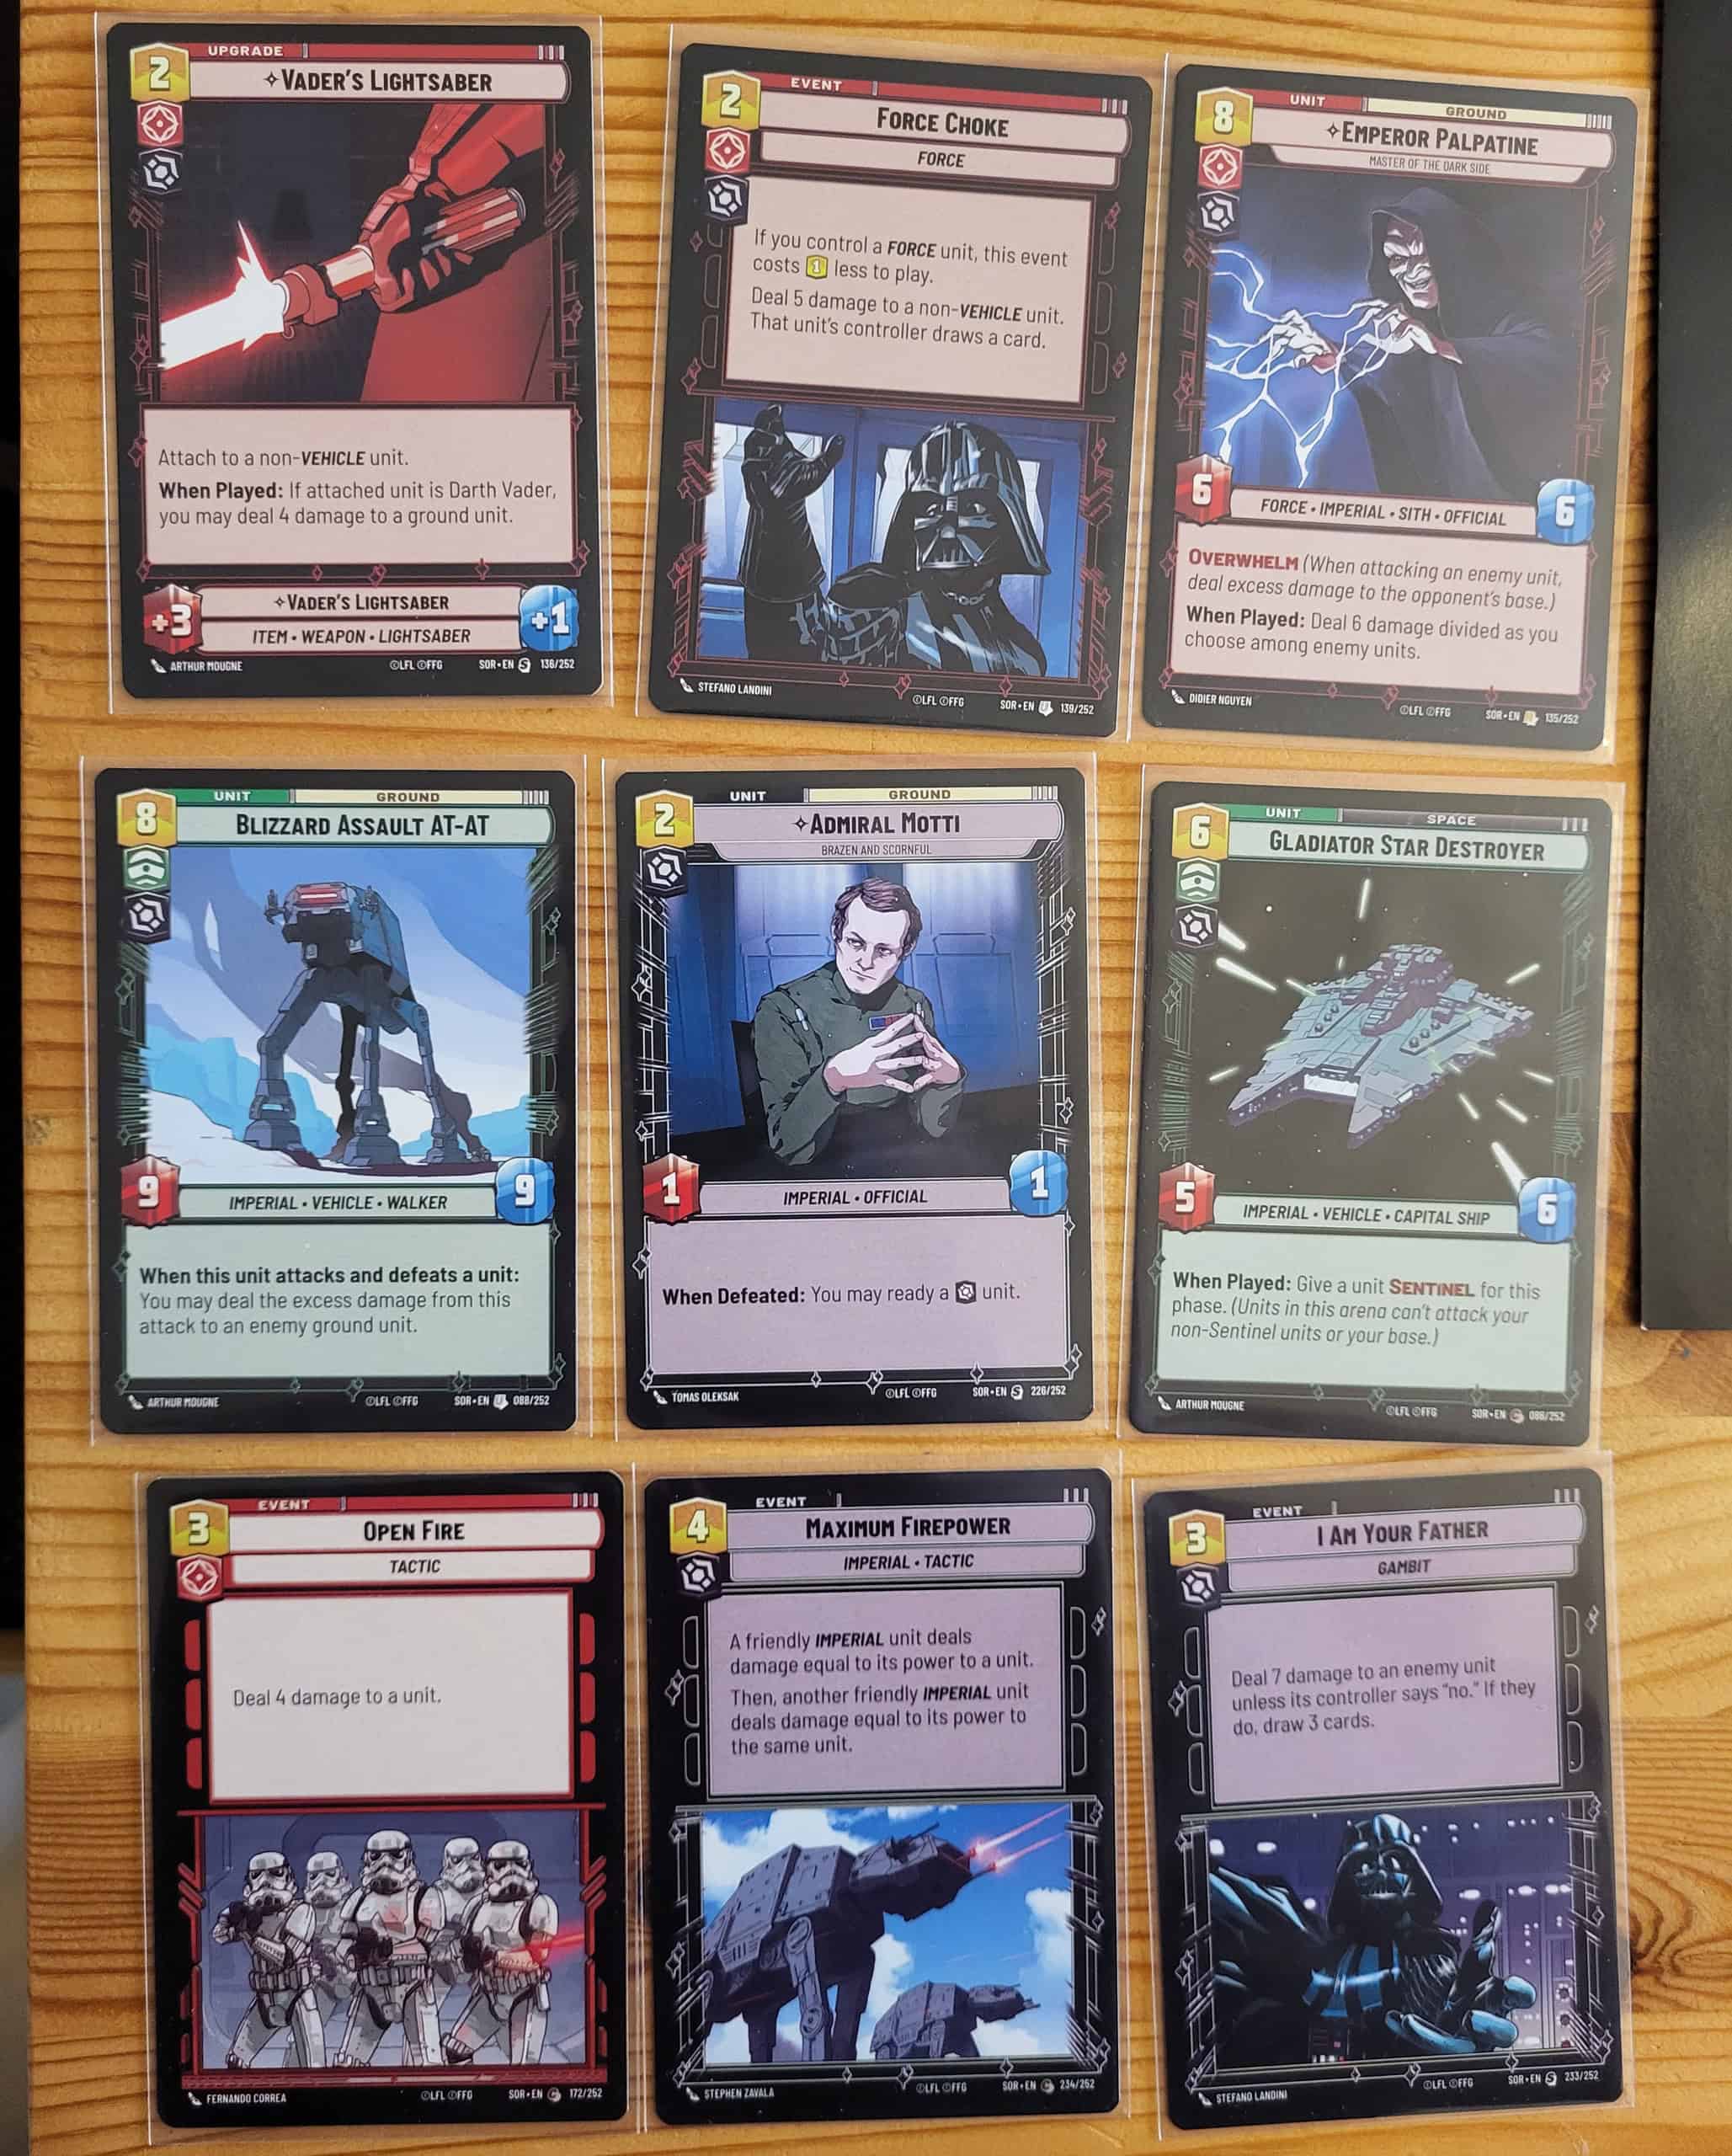 Yhdeksän Imperiumin korttia, mm. Force Choke, Palpatine ja "I Am Your Father".